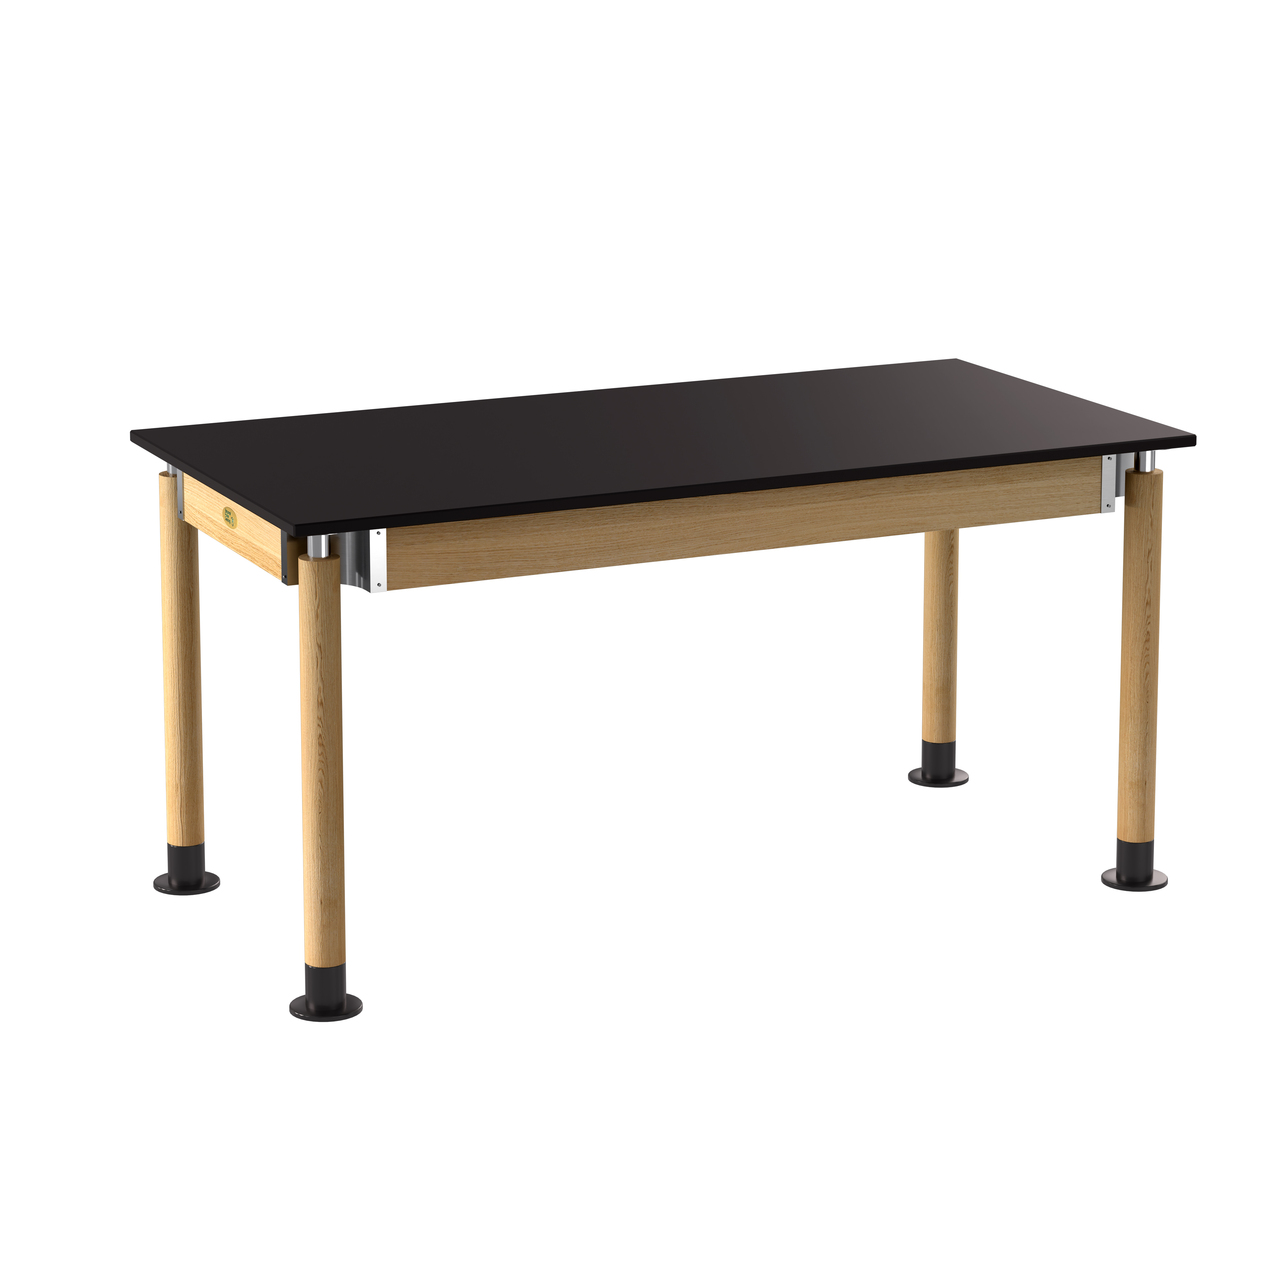 NPS Signature Science Lab Table, Oak, 30"x60", Chemical Resistant Top - Black Top and Oak Leg